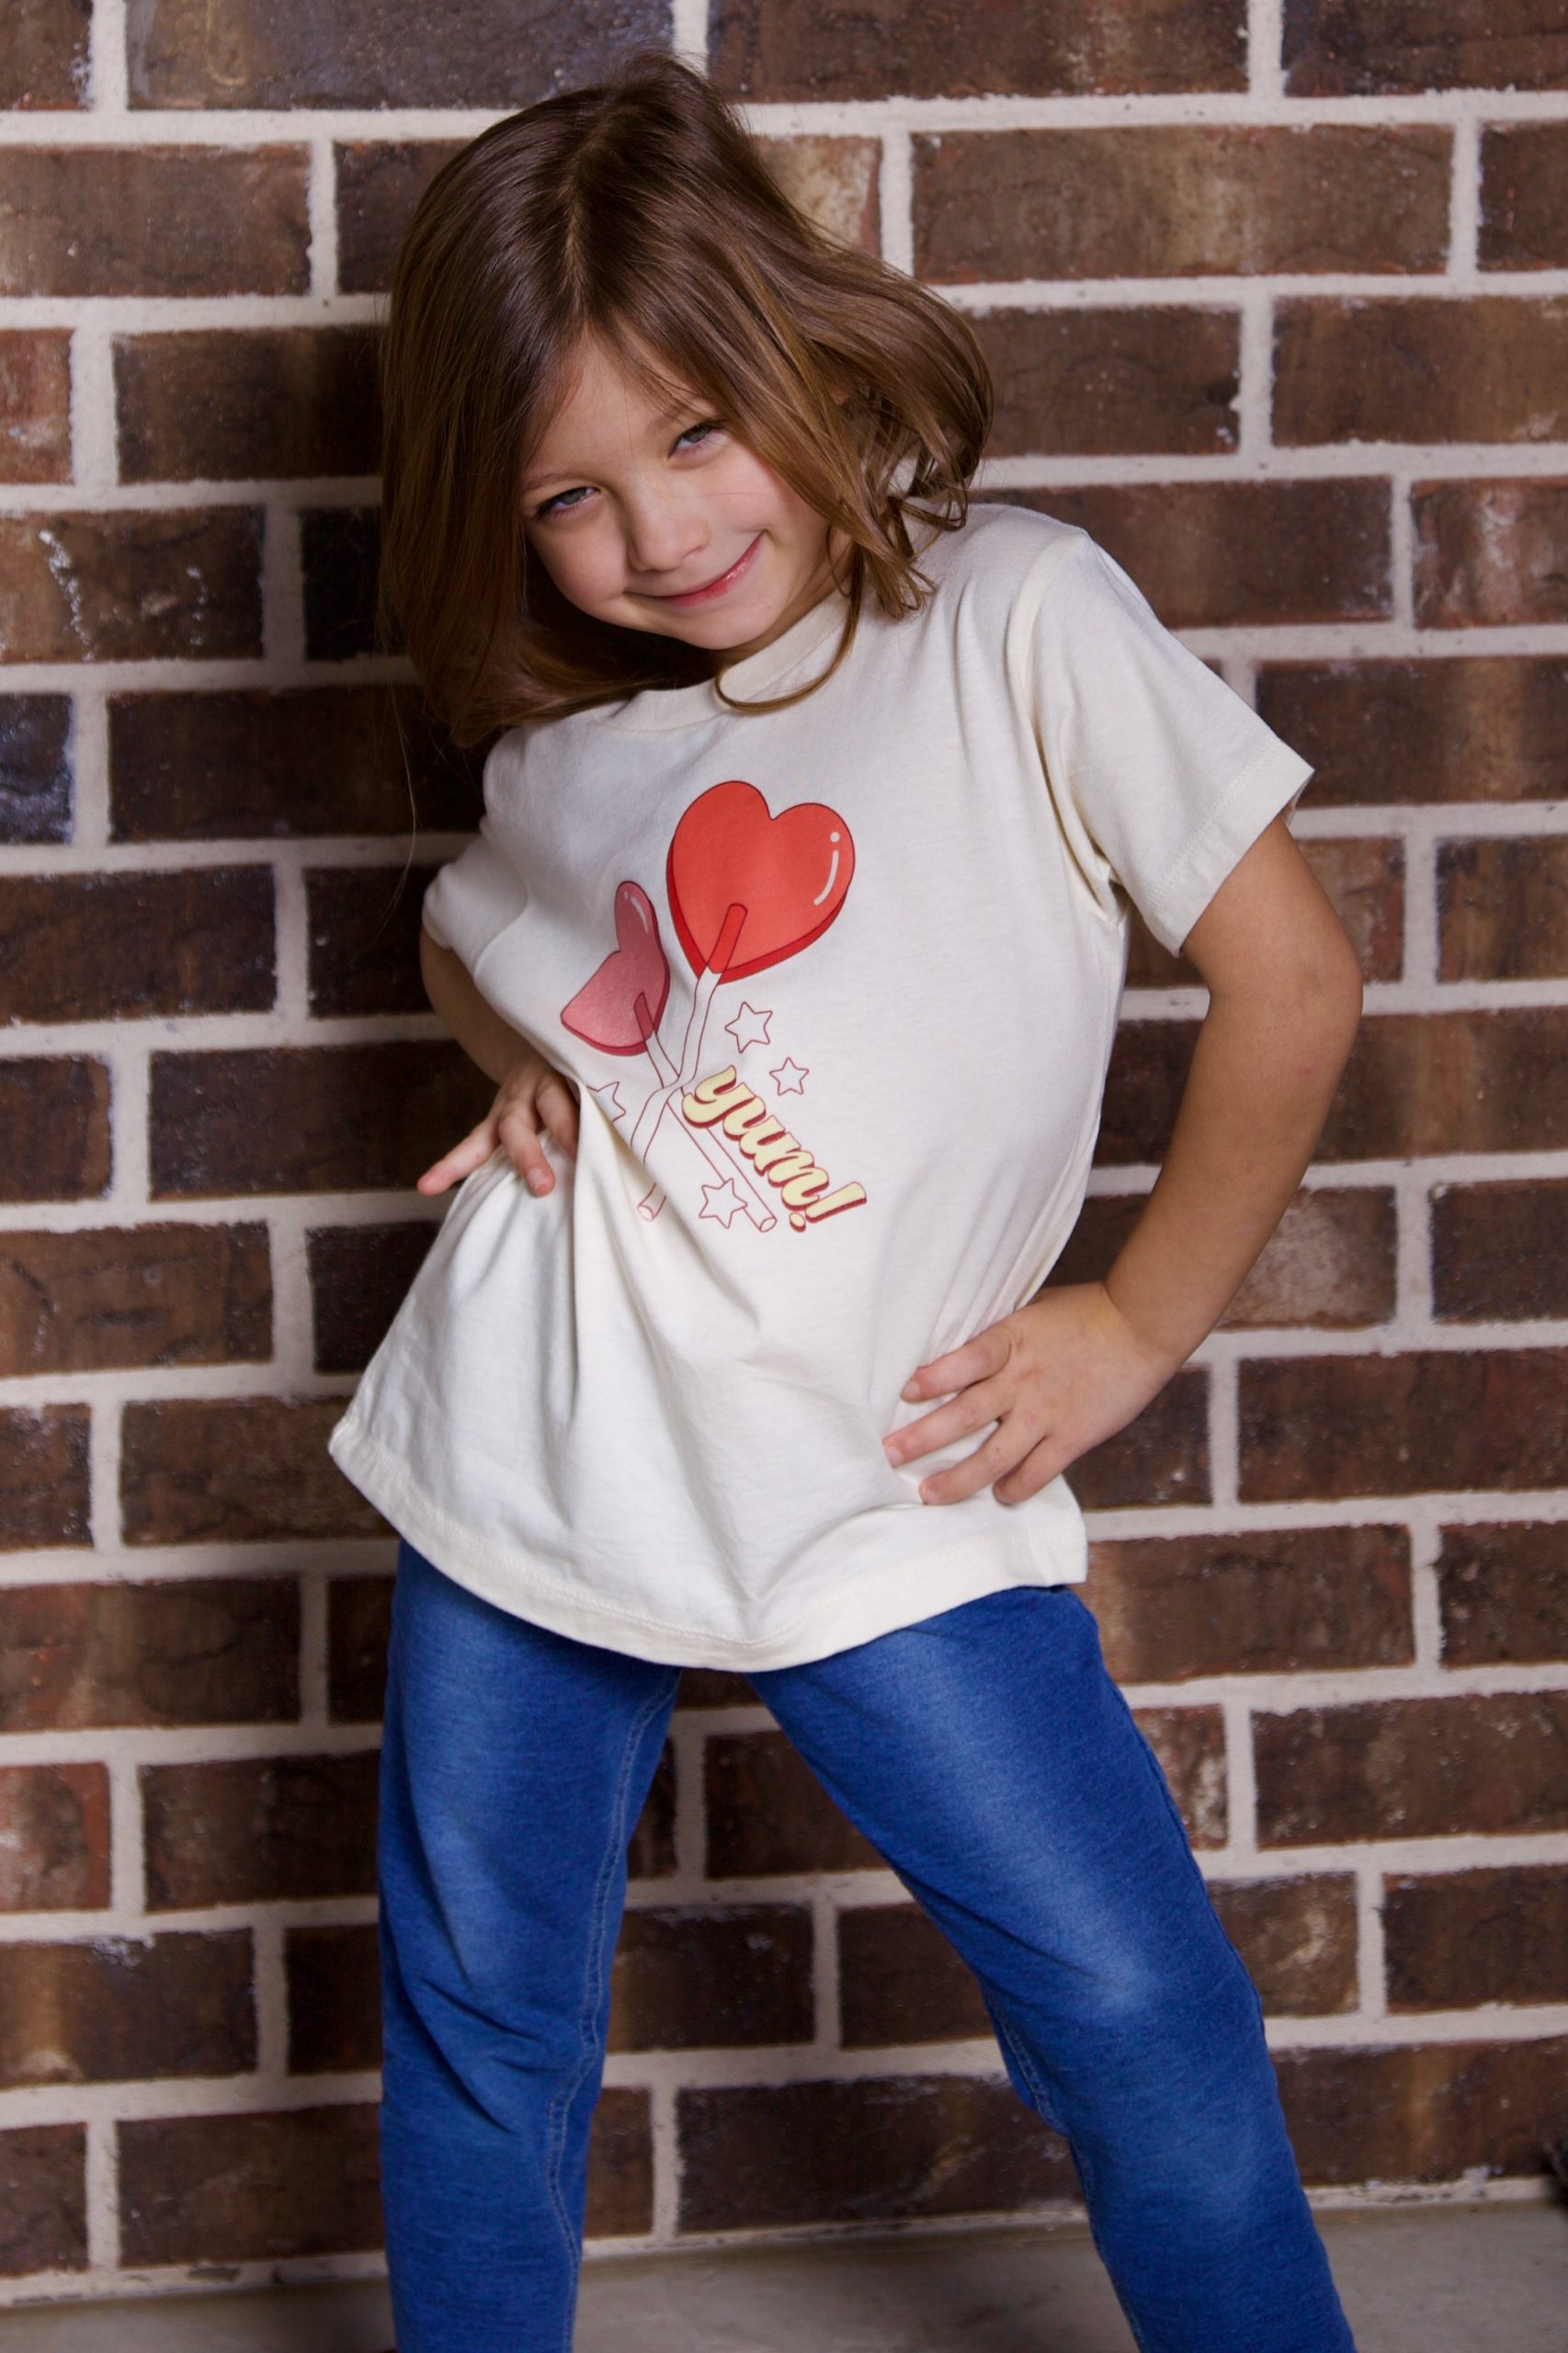 Lollipops Yum Kids Valentine's Day Shirt Model